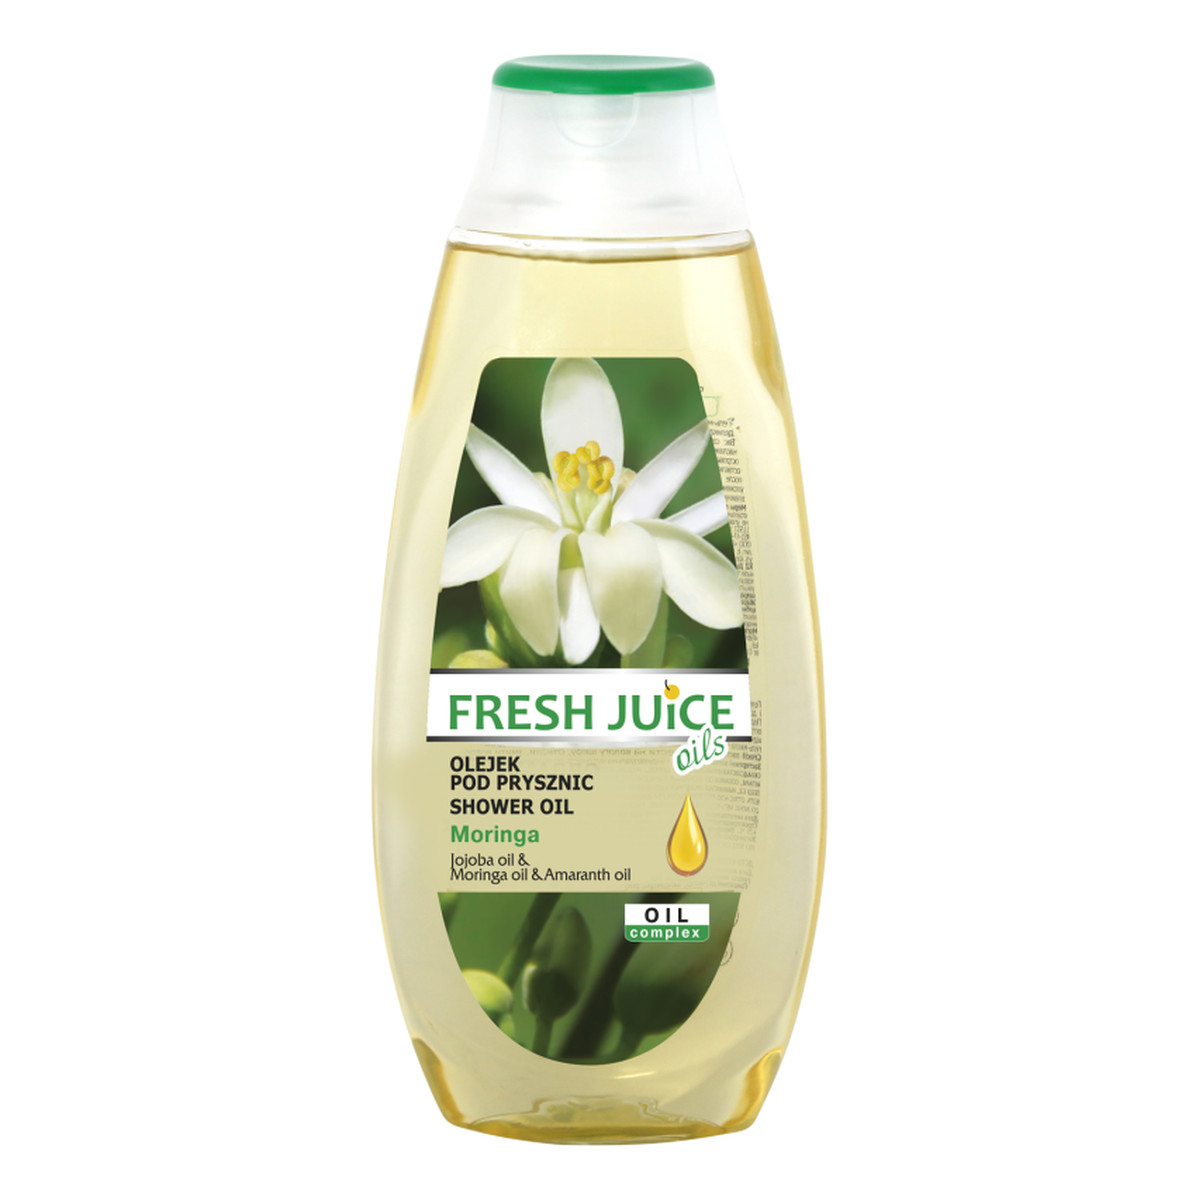 Fresh Juice Olejek pod prysznic Moringa 400ml